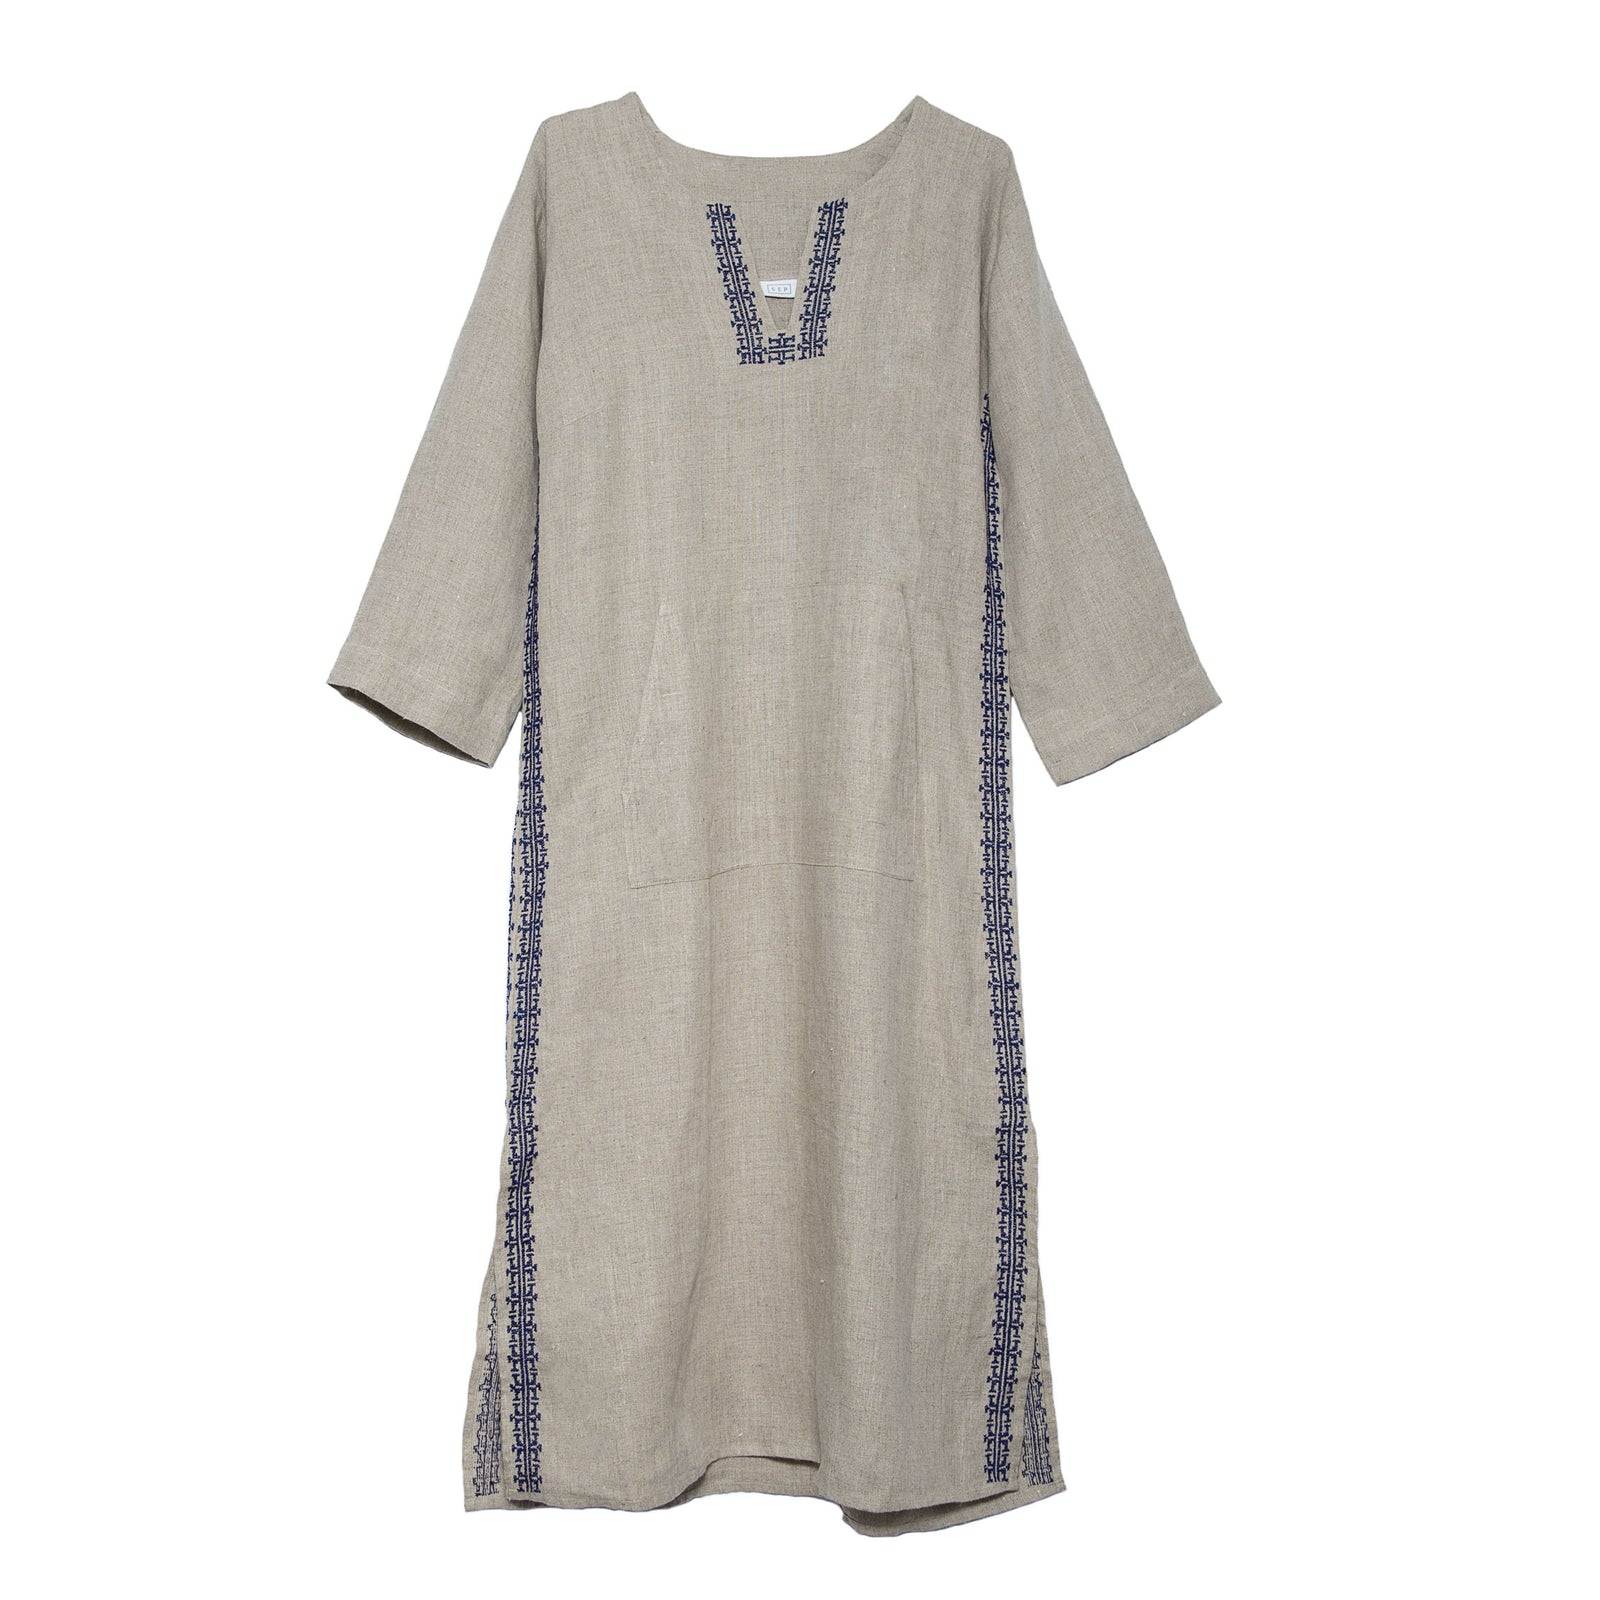 Keevu.in Cotton Designer Kaftan dress online india (Complete set), Size:  M,L at Rs 1780 in Surat